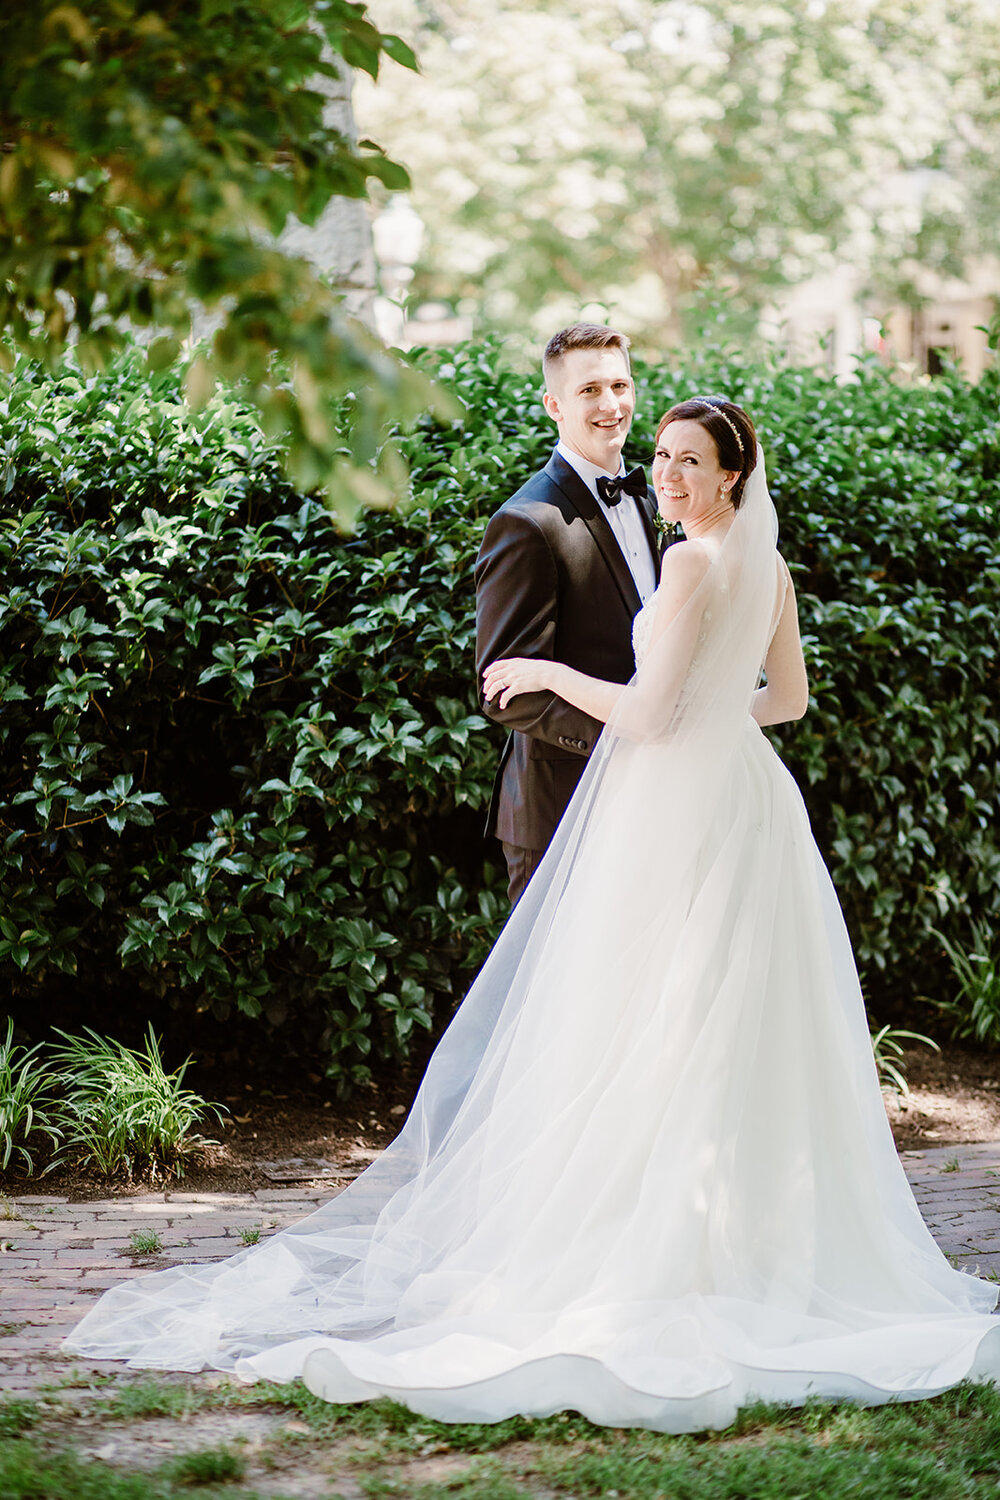  Bride and Groom portraits | Sarah Mattozzi Photography | Ball Gown Wedding dress and Black Tux | Outdoor Classic Wedding at Third Church and Veritas School | Richmond Wedding Photographer 